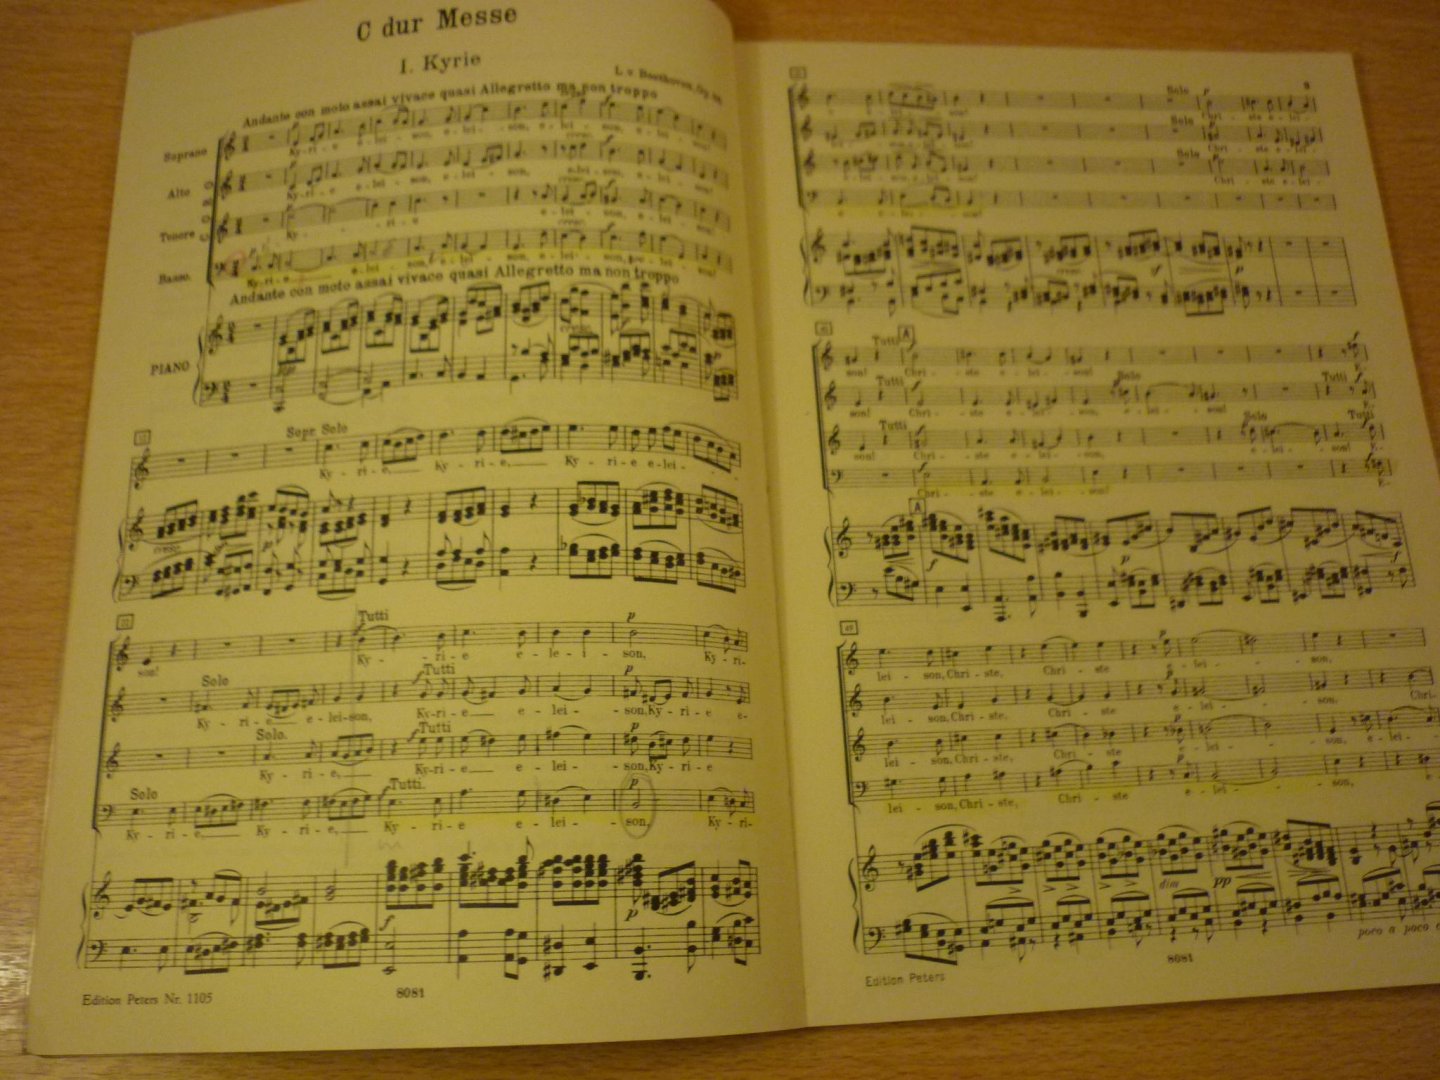 Beethoven; Ludwig von - Messe C-Dur; Opus 86